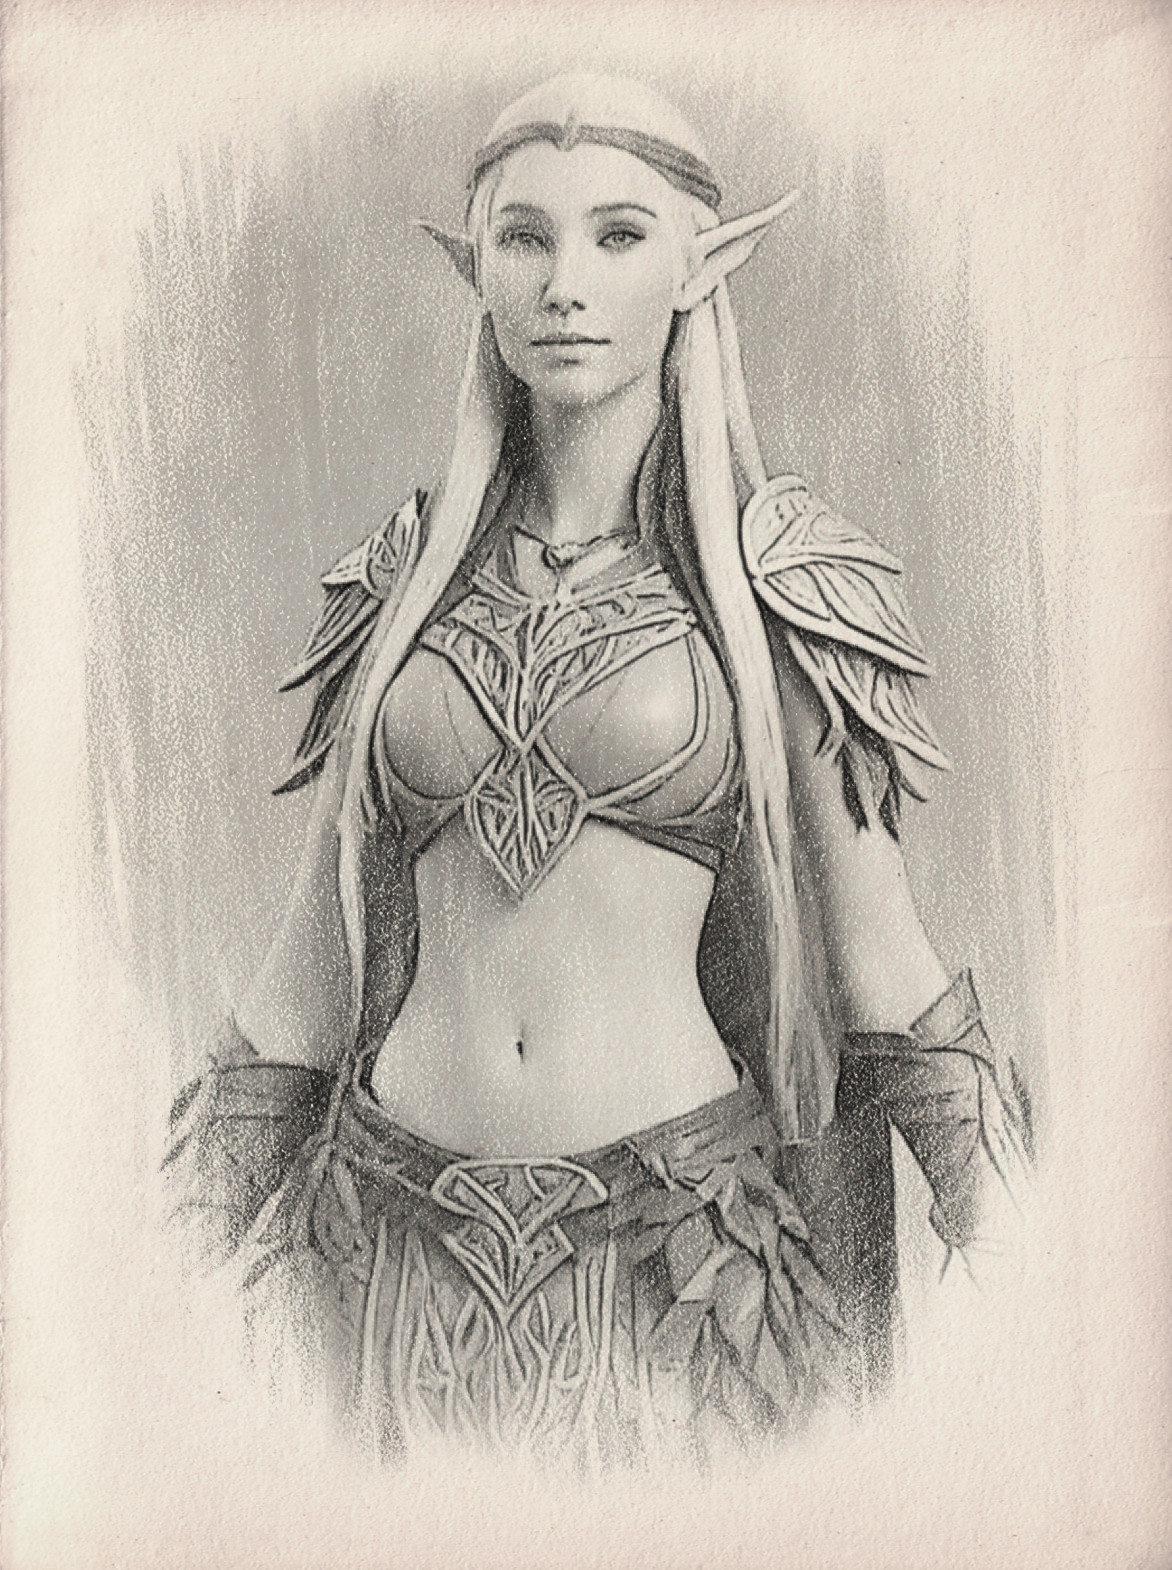 Minella the elven princess NPC for TTRPGs